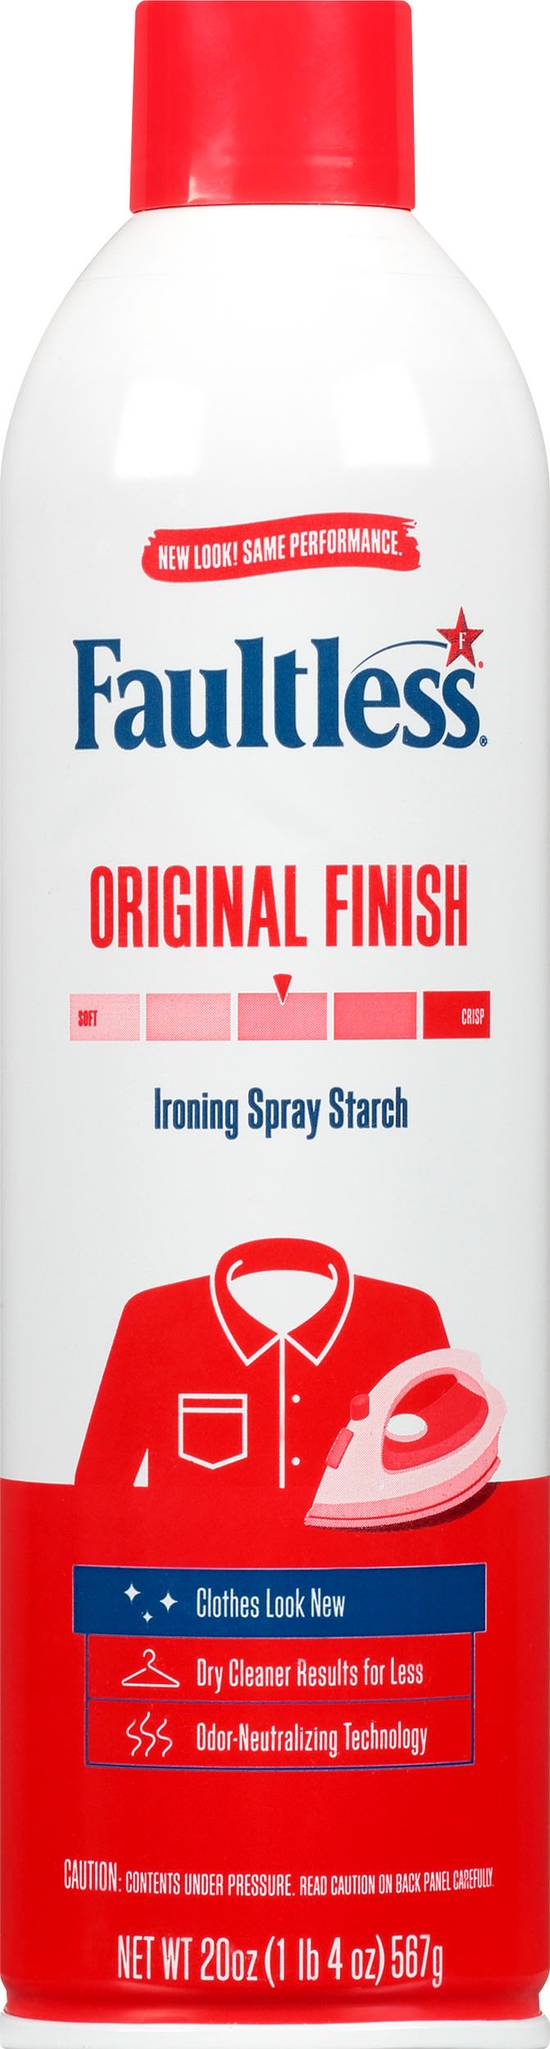 Faultless Original Finish Ironing Spray Starch 20 oz